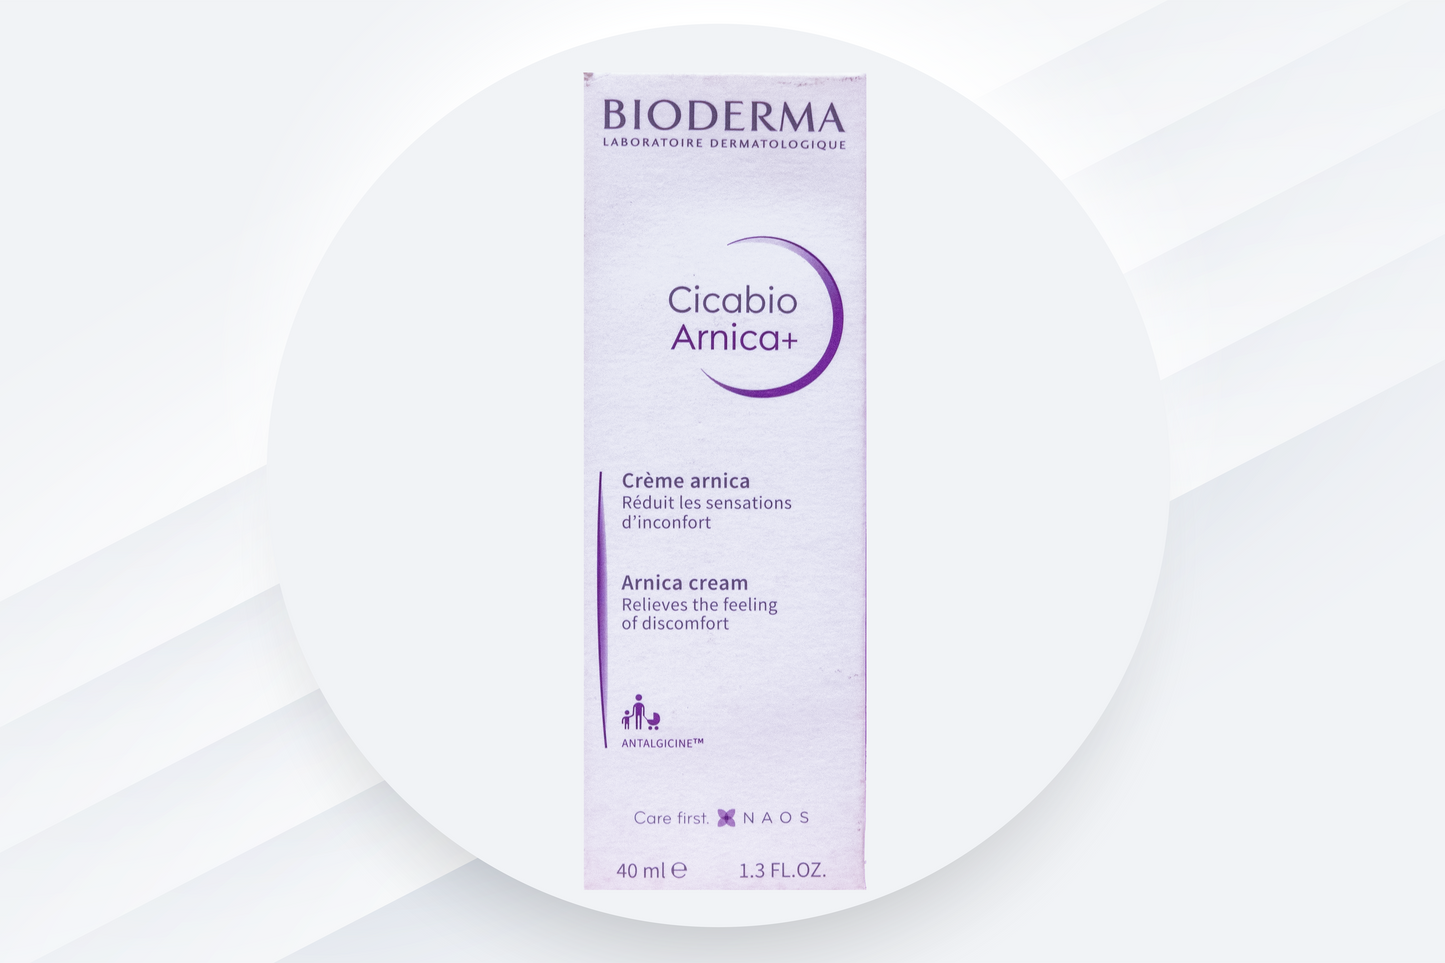 Bioderma-Cicabio-Arnica+-clintry